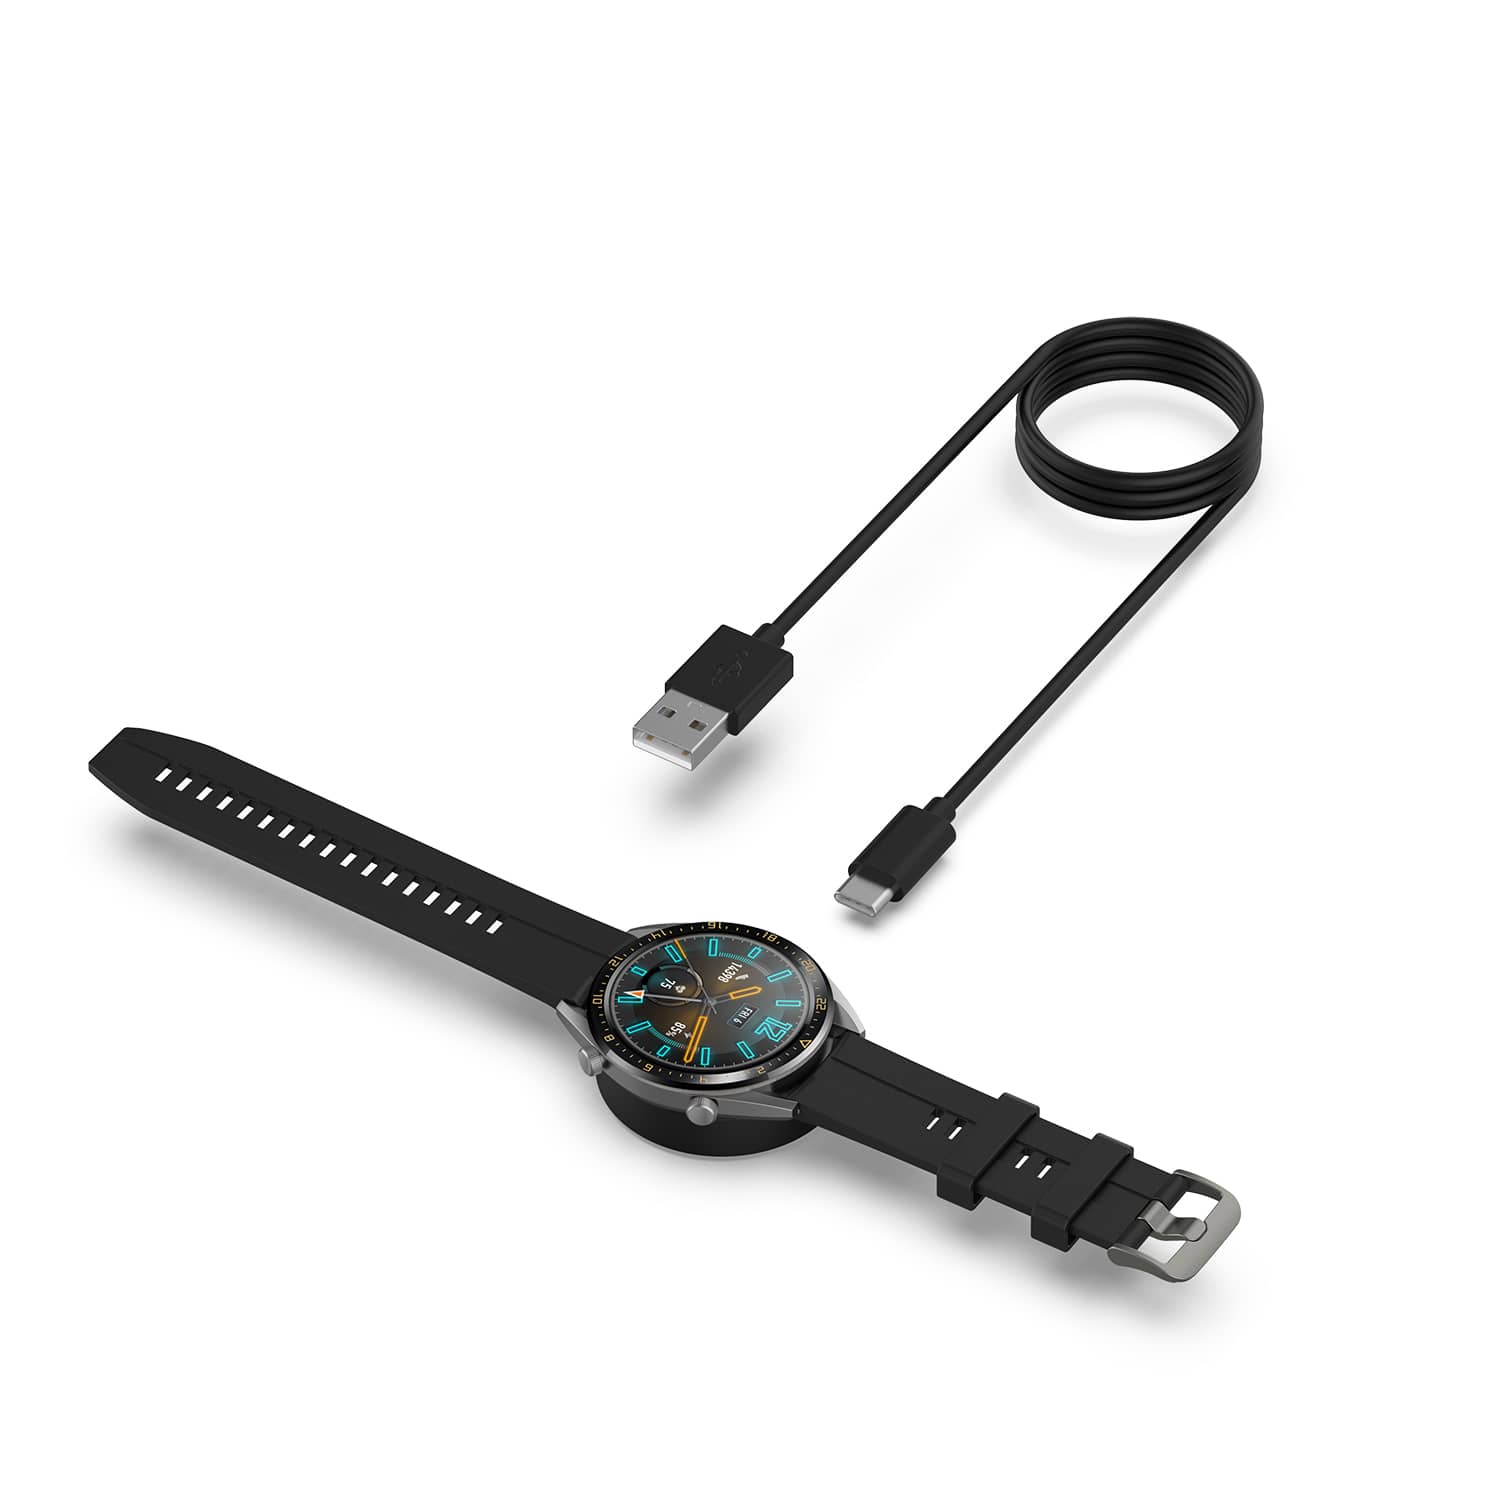 Cargador de Base para Huawei Watch GT / GT2 / Honor Watch Magic 2, Cable de  carga rápida